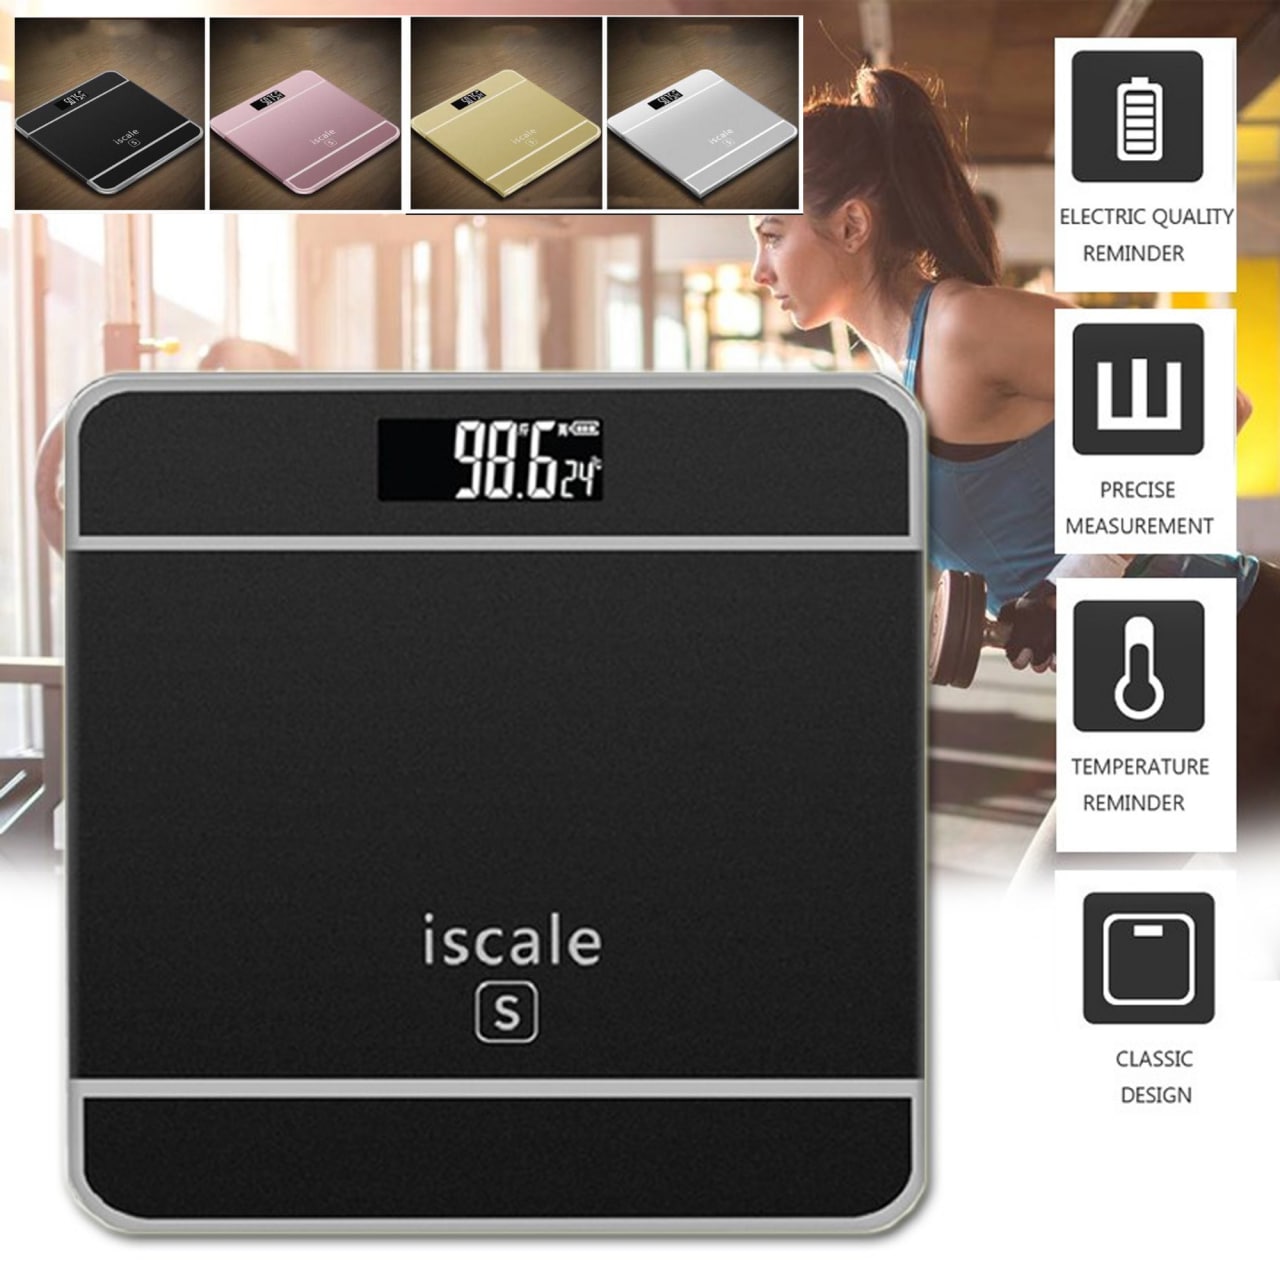 Electronic+Bathroom+Scale+%7C+I+Scale+S